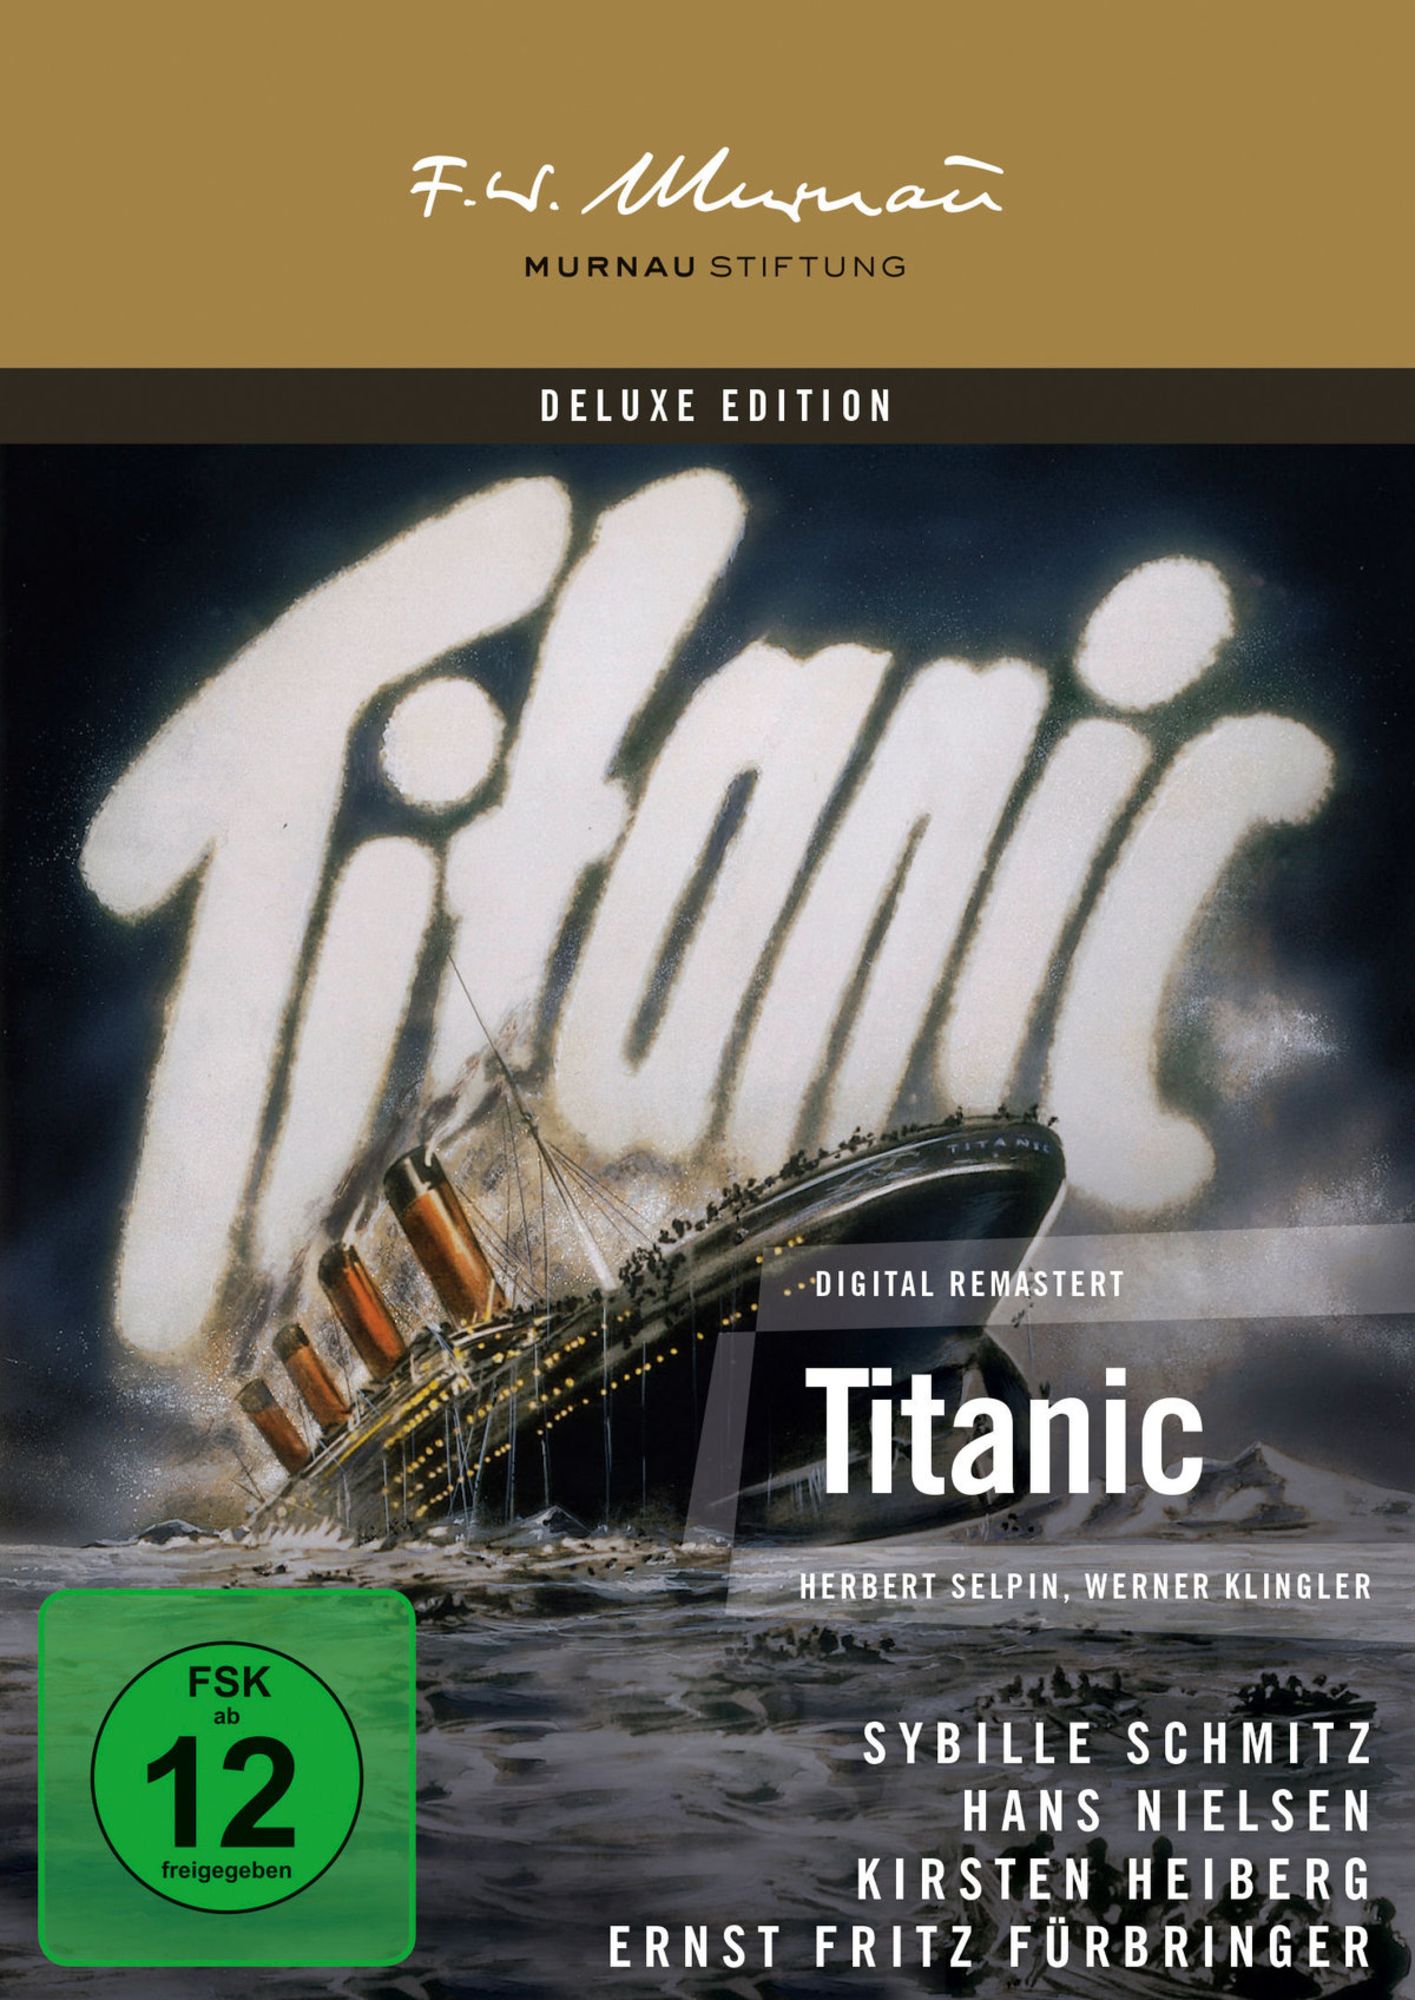 Titanic - Deluxe Edition von Herbert Selpin - DVD | Thalia